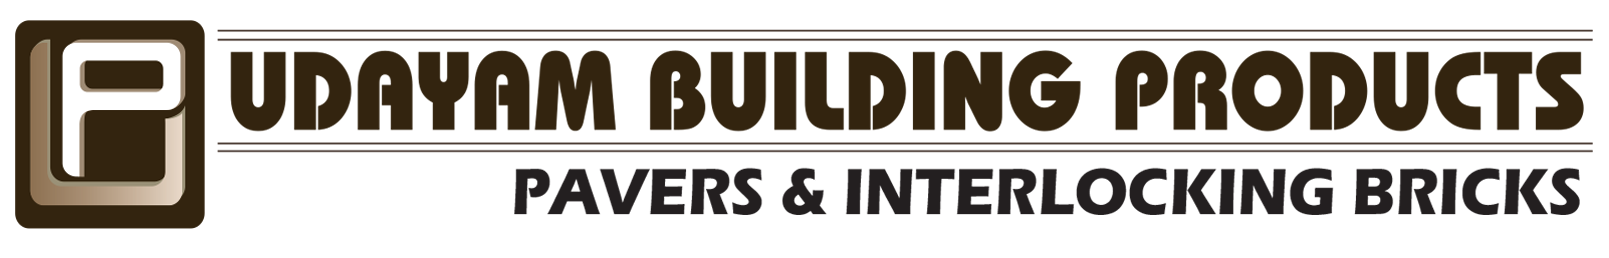 Udayam Building Products Pavers and Interlocking Bricks